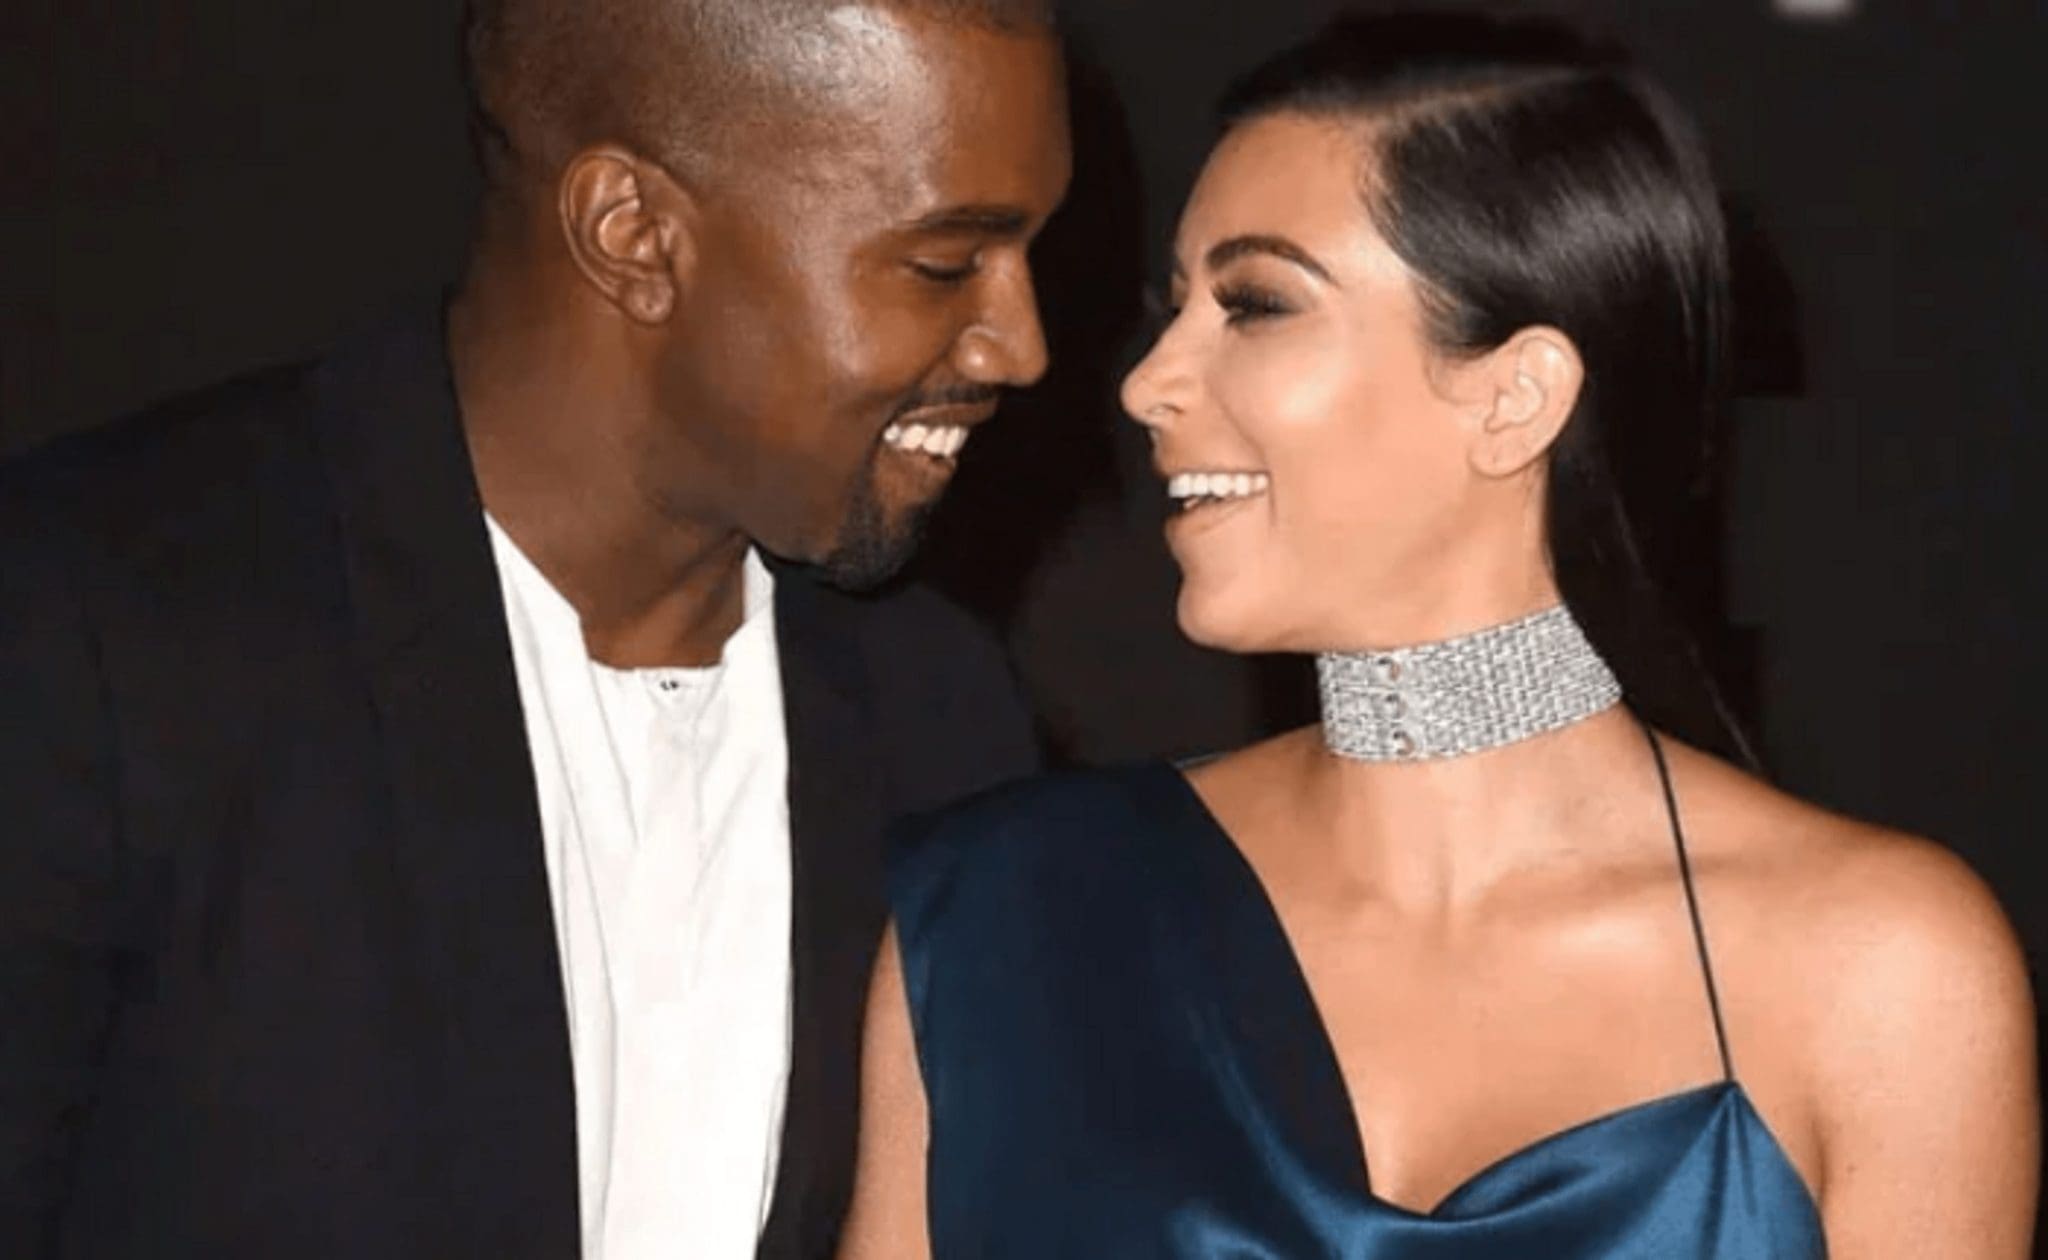 Kim Kardashian spoke about her relationship with Kanye West